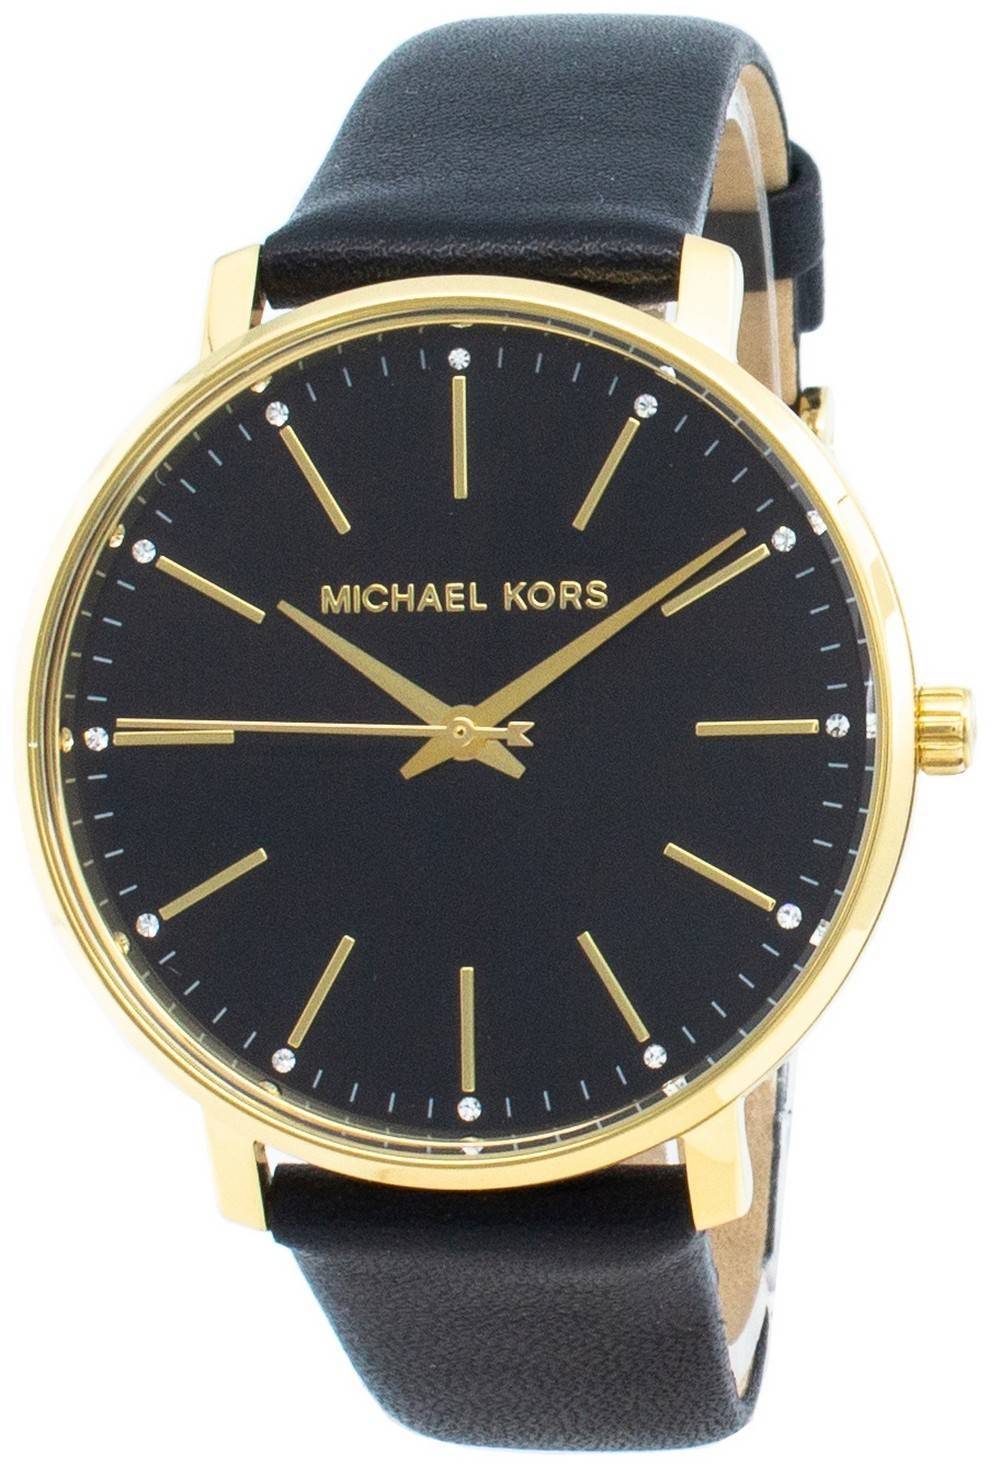 Michael Kors 時計販売を購入 - Creationwatches